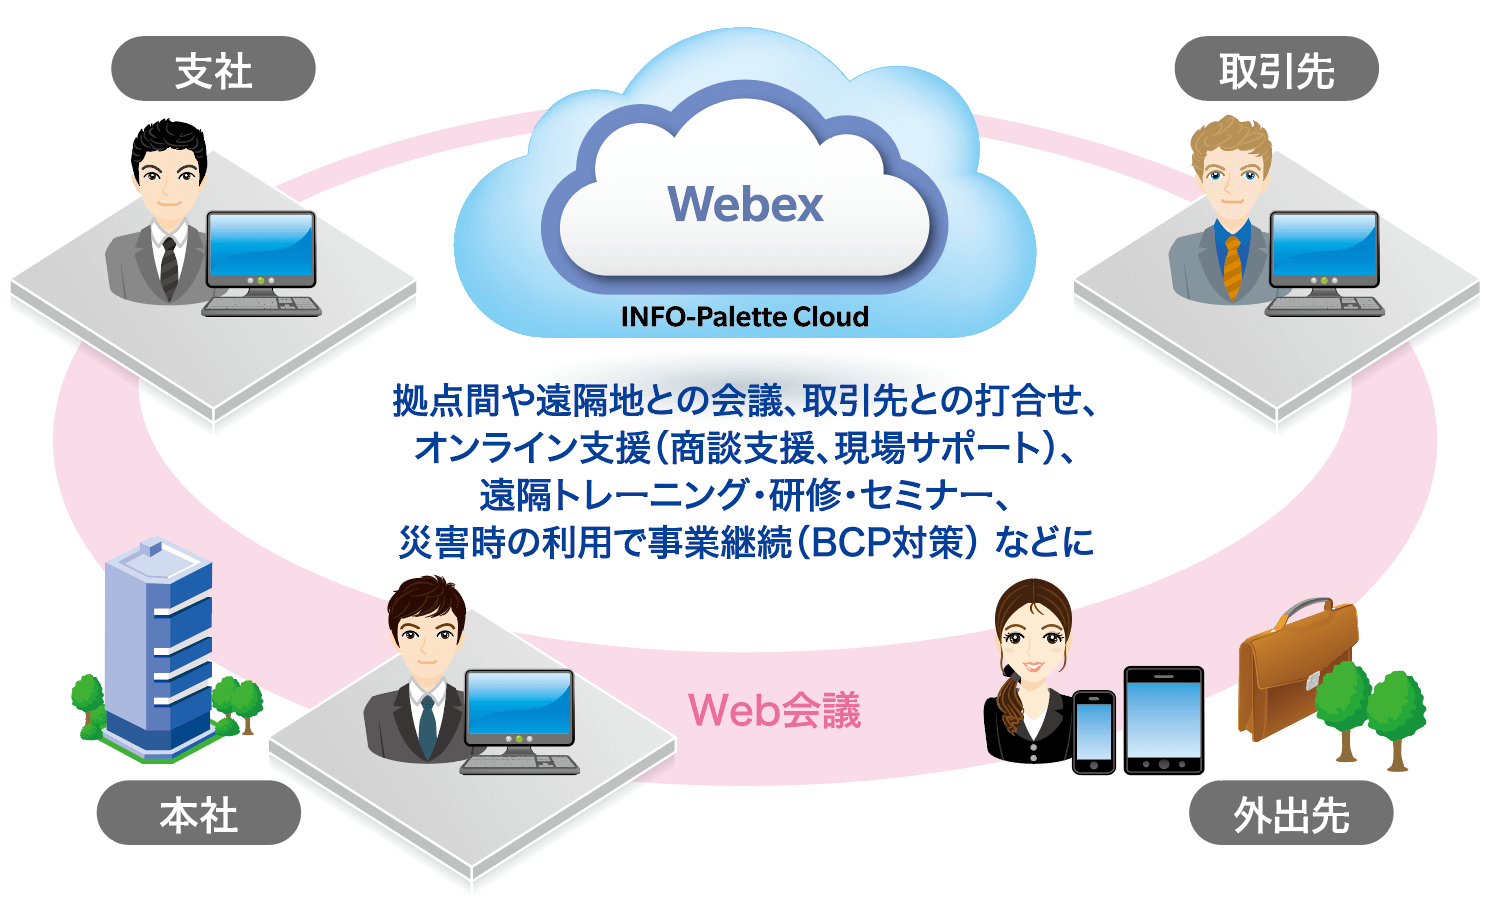 「WEB会議システム WebEx」の図